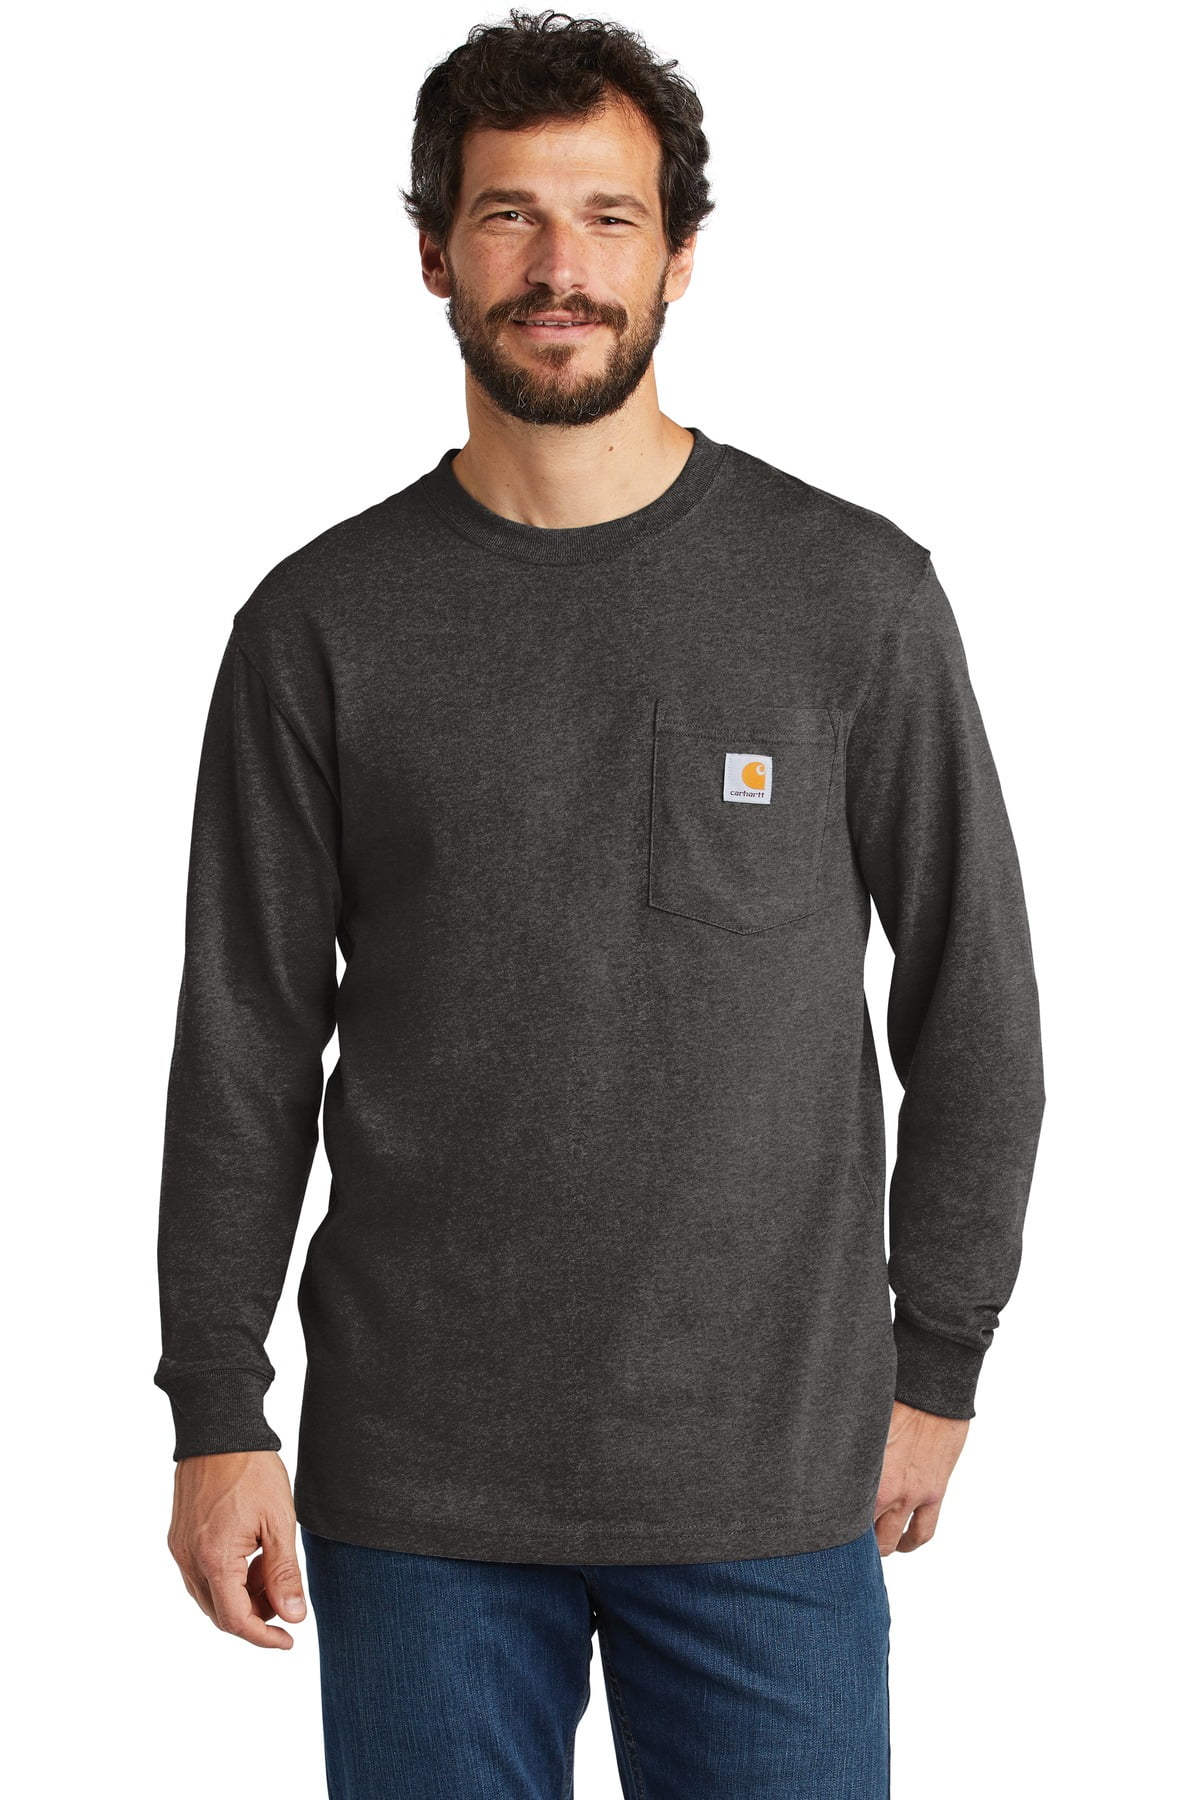 Carhartt Workwear Pocket Long Sleeve T-Shirt - Walmart.com